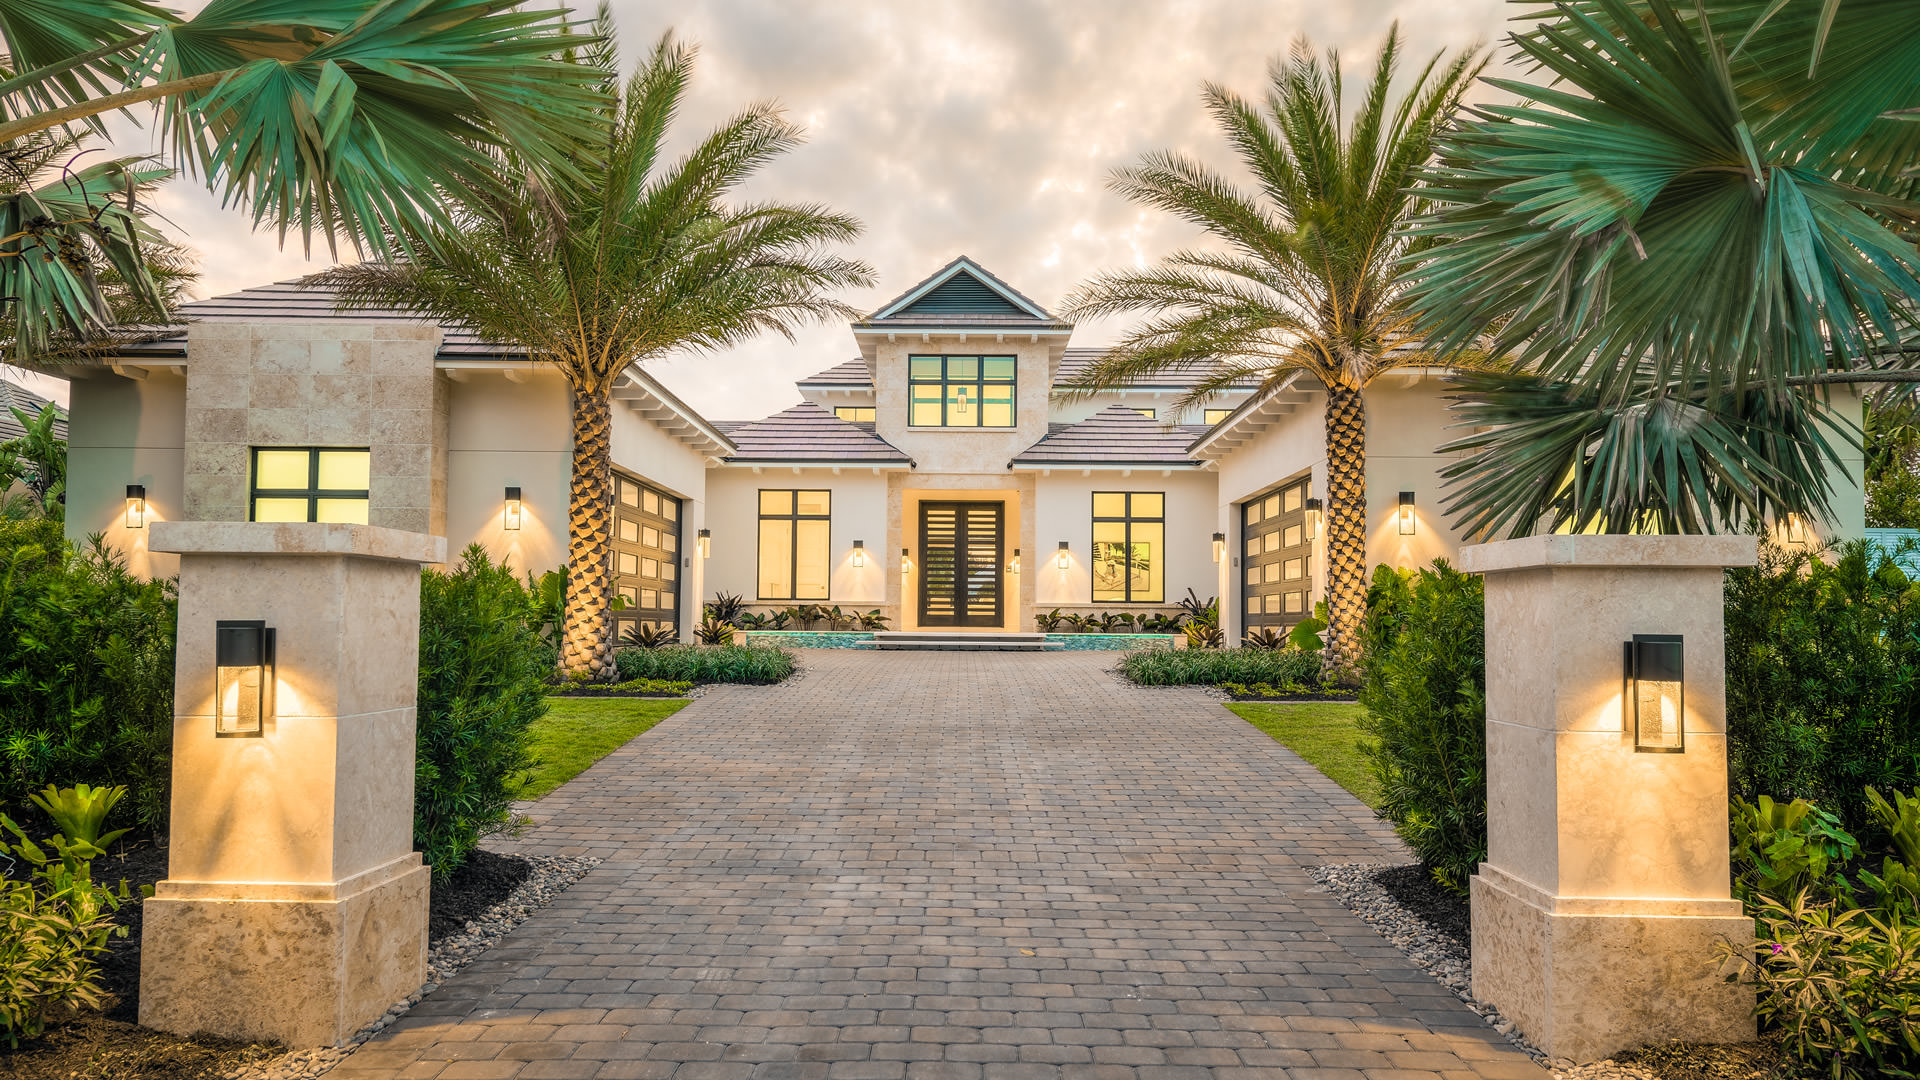 Luxury home exterior of Clive Daniel interior design in port royal Naples Florida